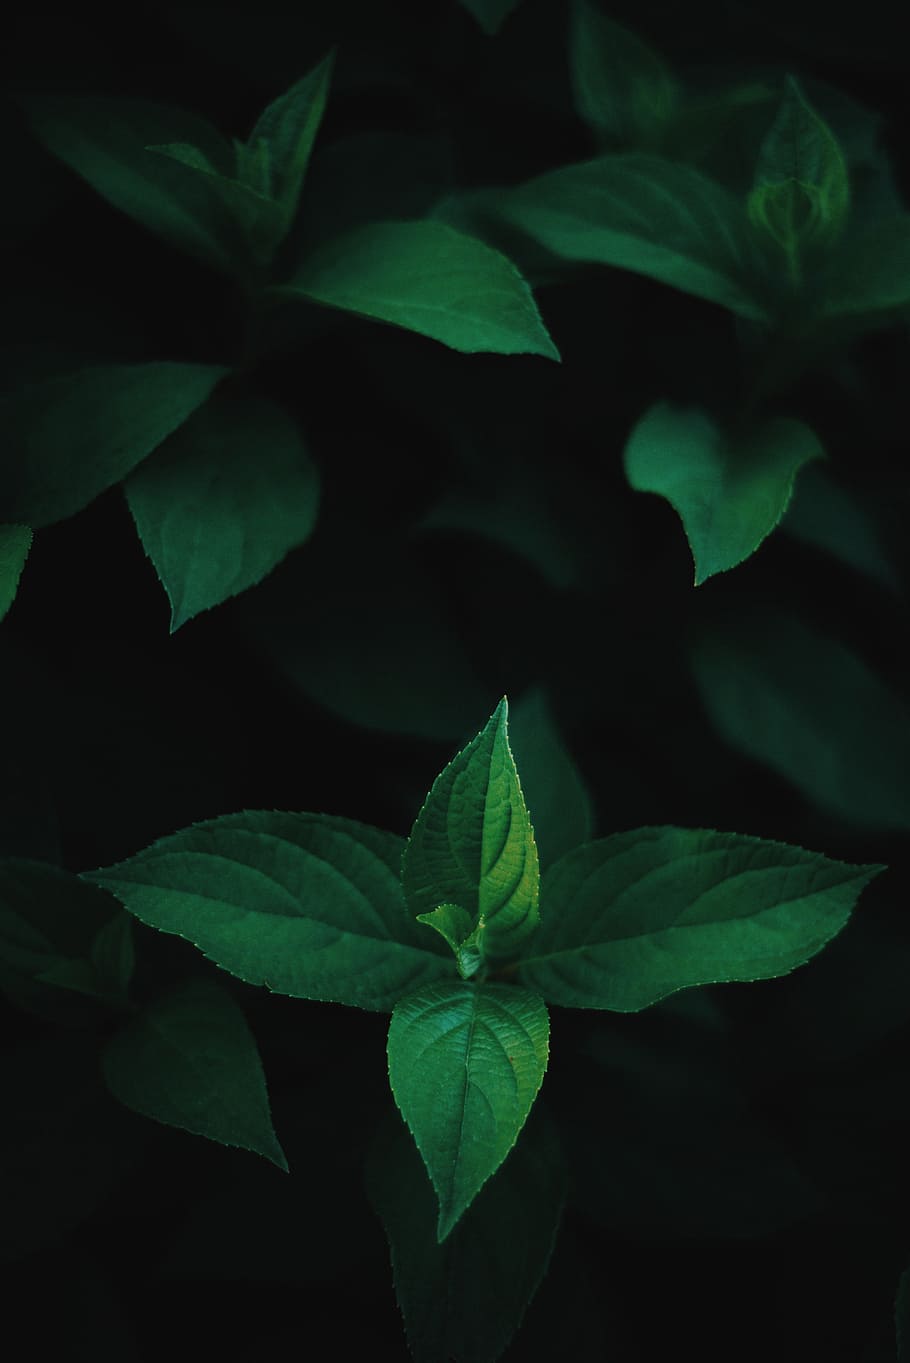 green mint on black background, green leaf plant, leaves, dark